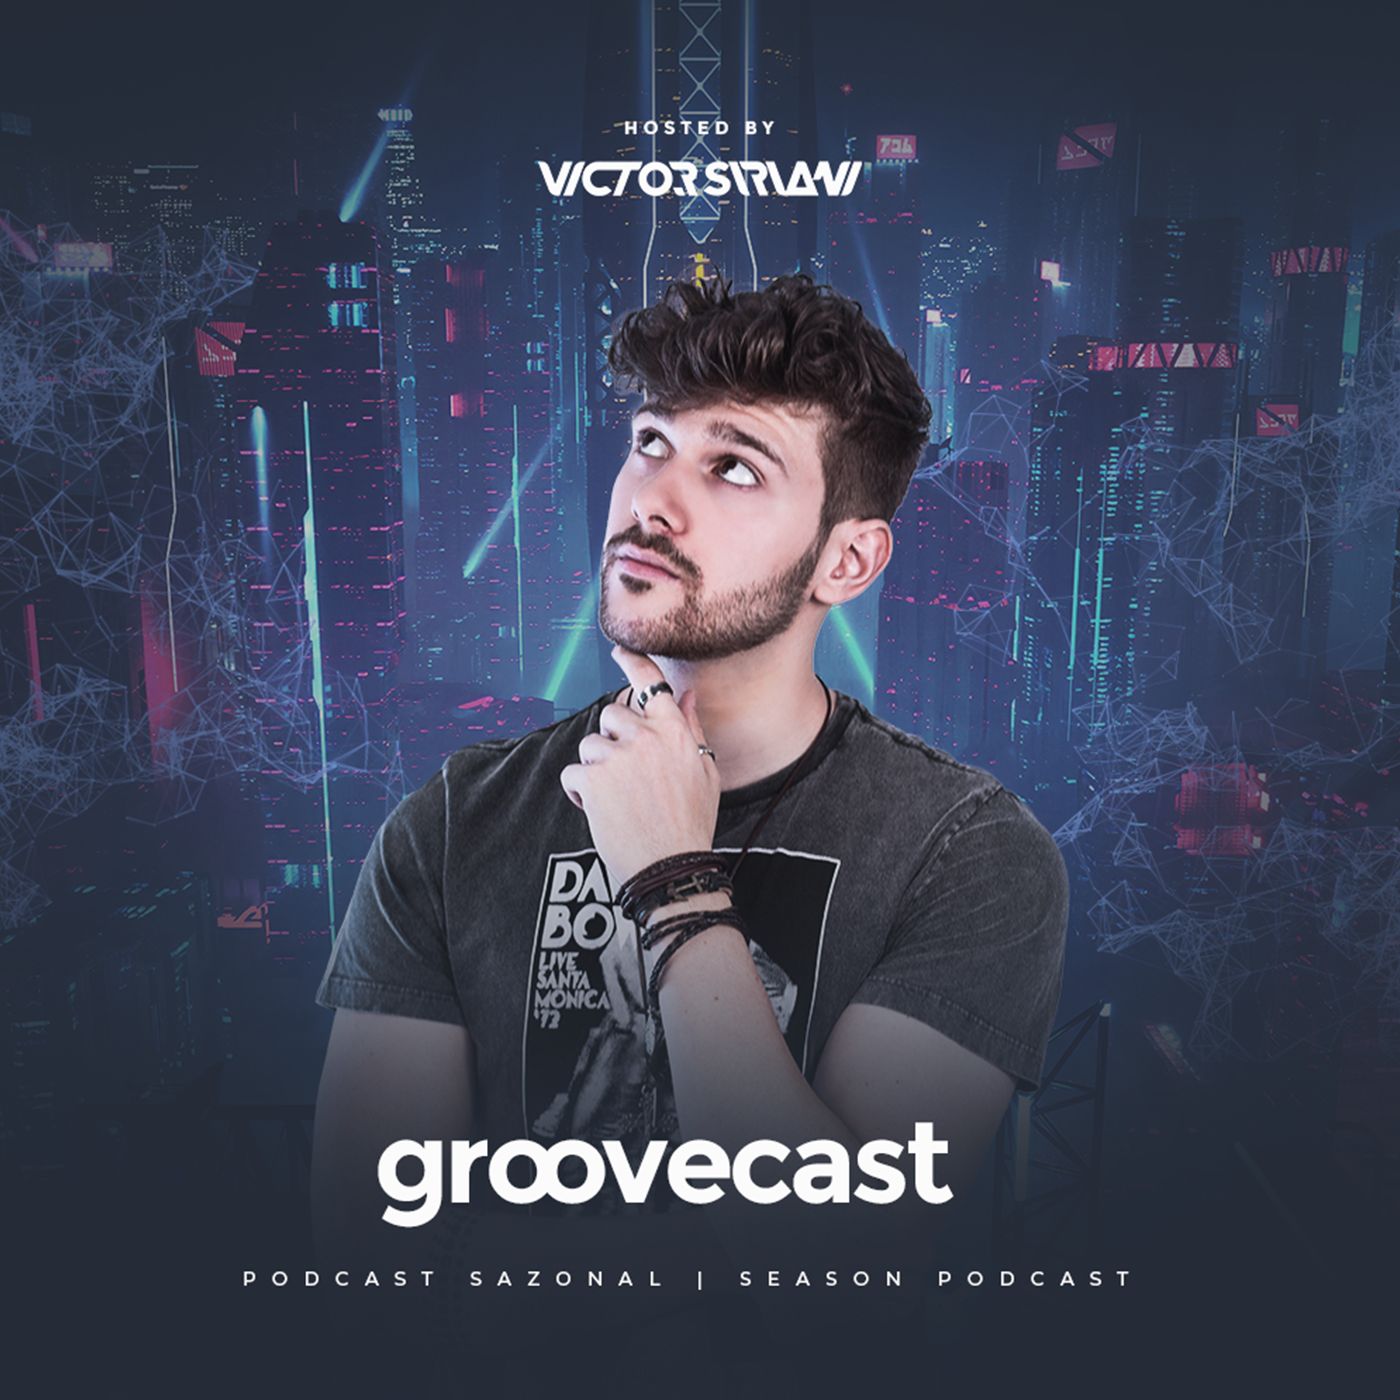 Groovecast